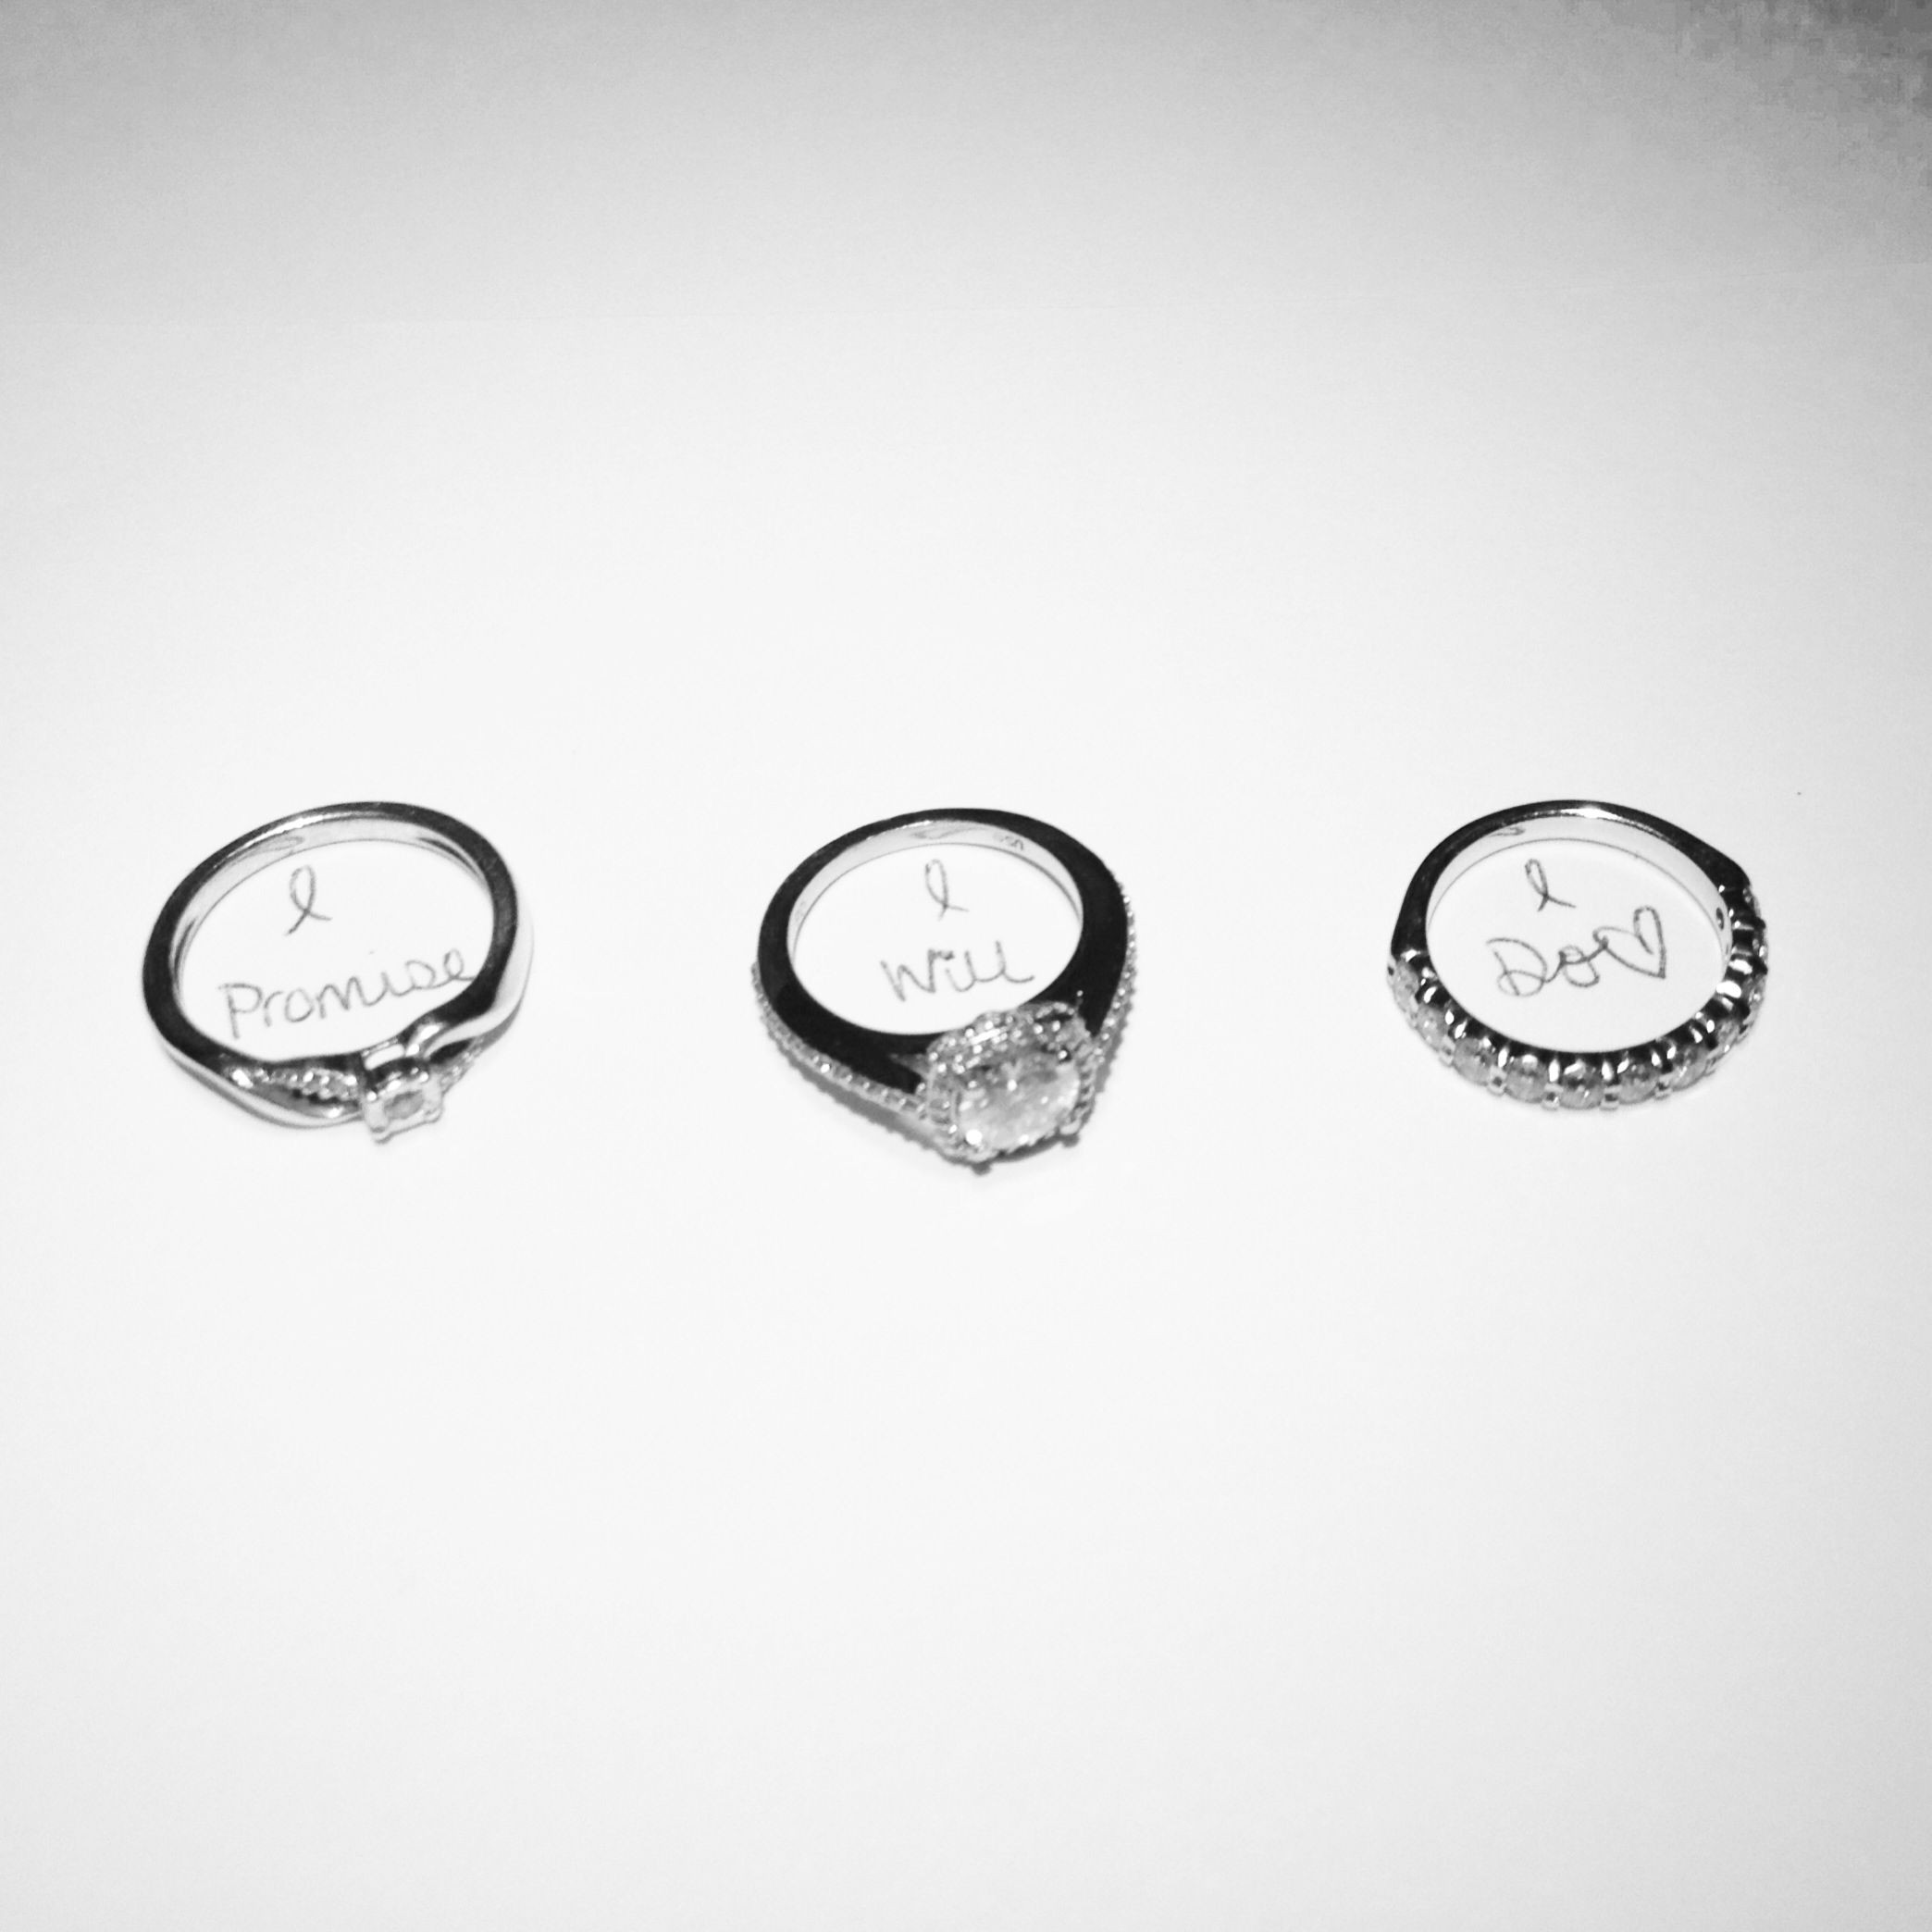 Promise Ring Engagement Ring And Wedding Ring Set
 I promise I will I do